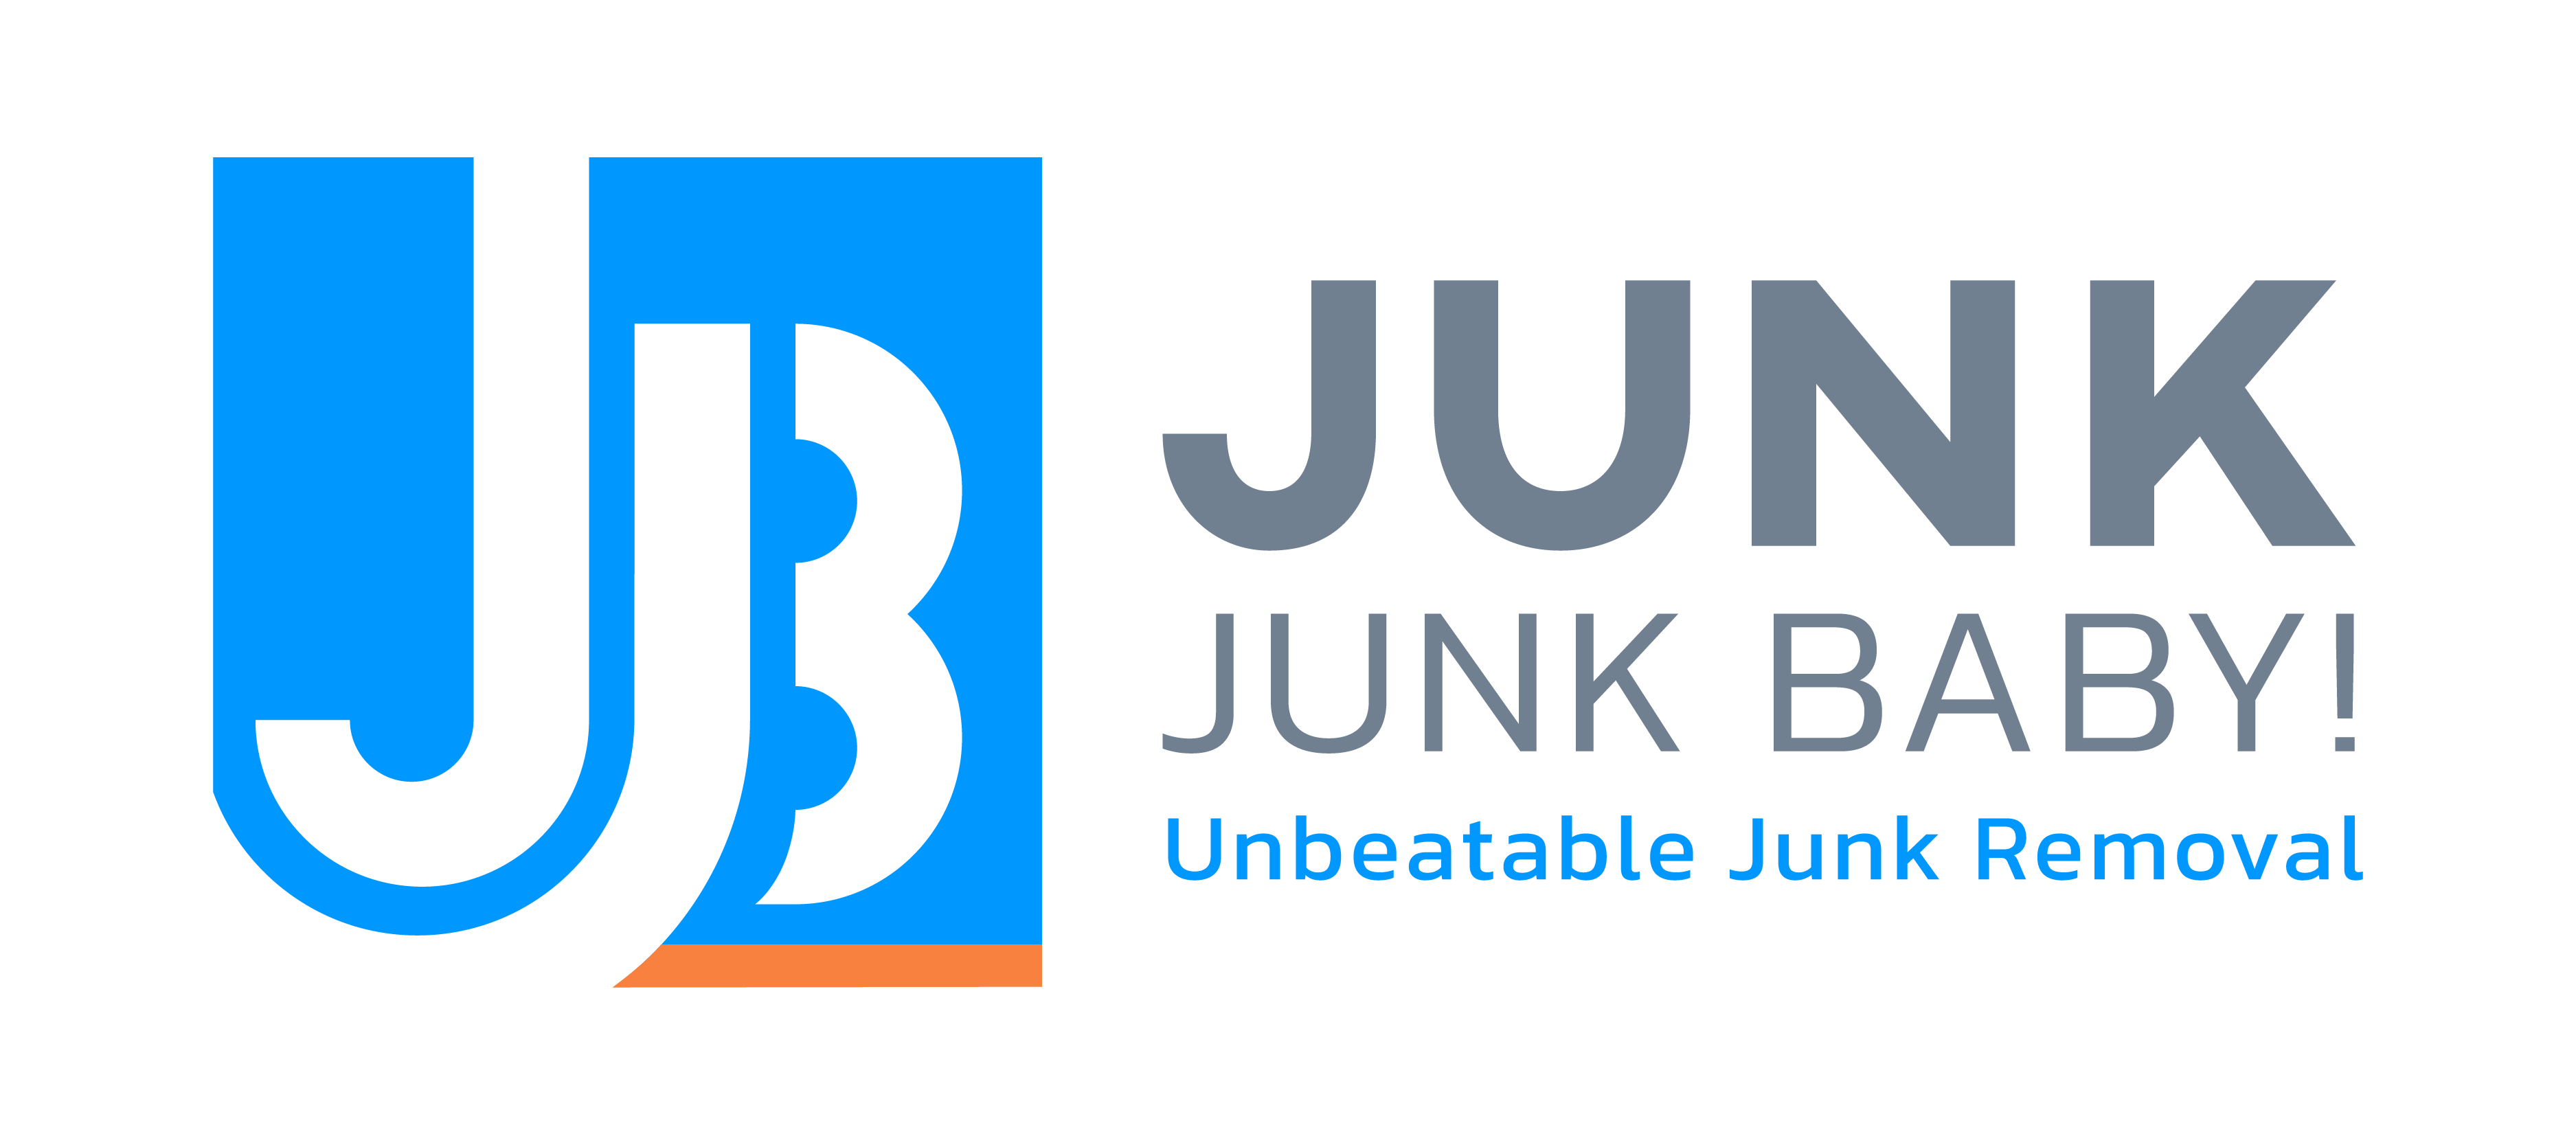 Junk Junk Baby! logo